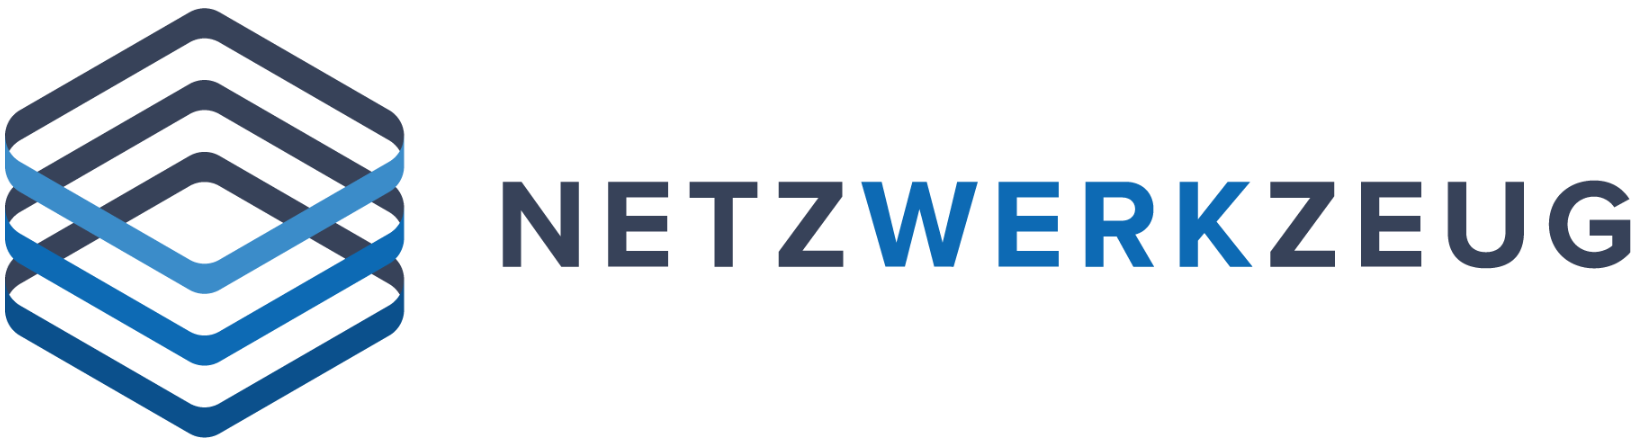 NETZWERKZEUG.com